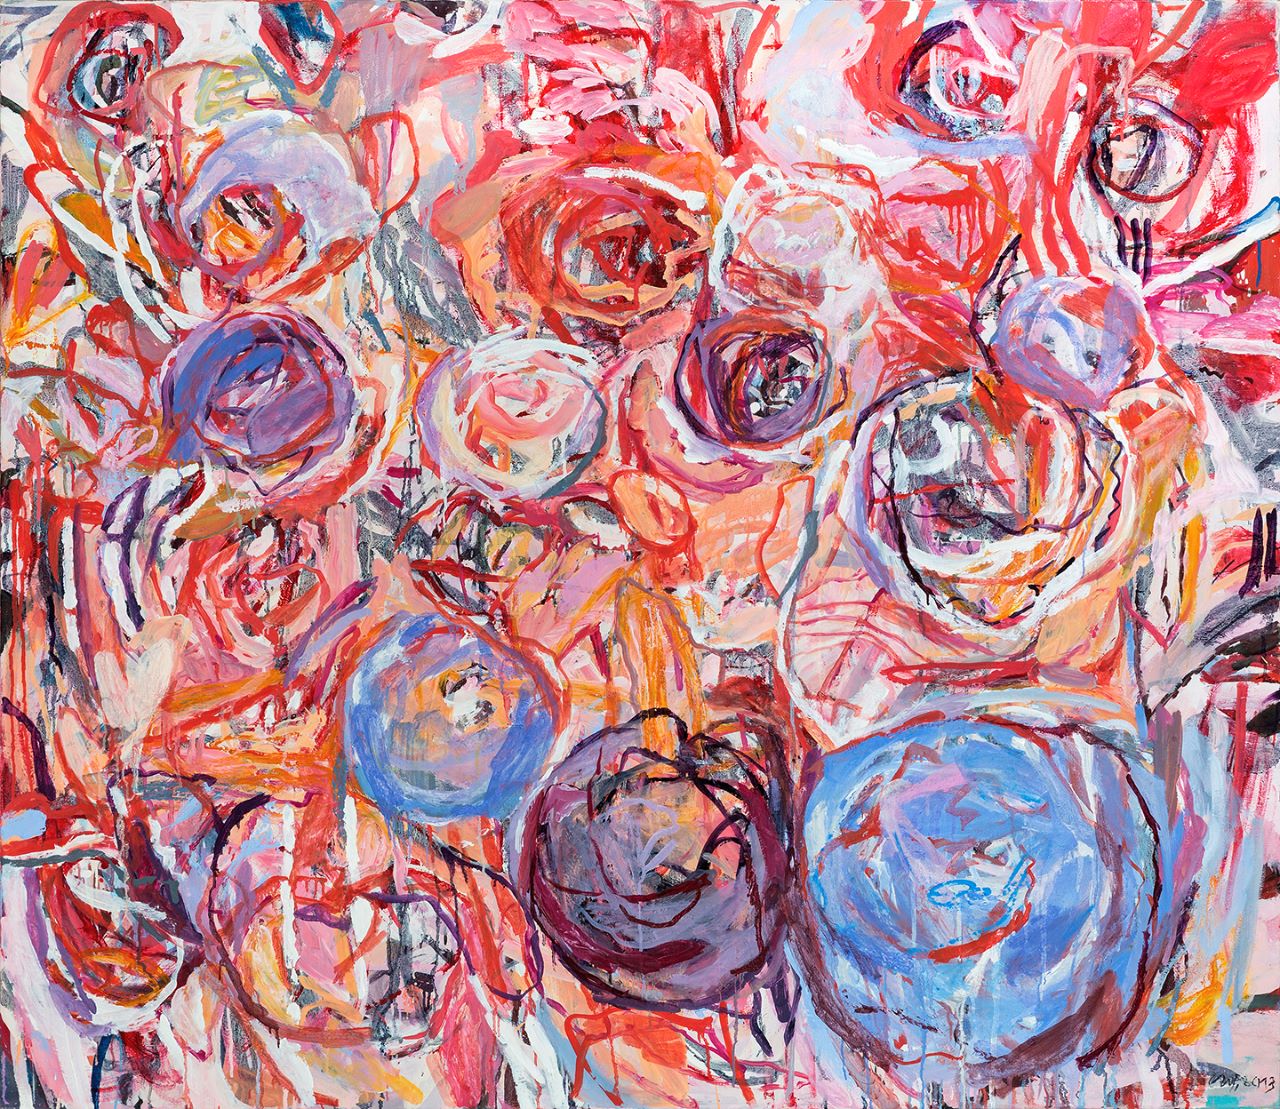 Elke Wree, Rosenzyklus, Bild XII, 2013, Öl auf Leinwand, 130 cm x 150 cm